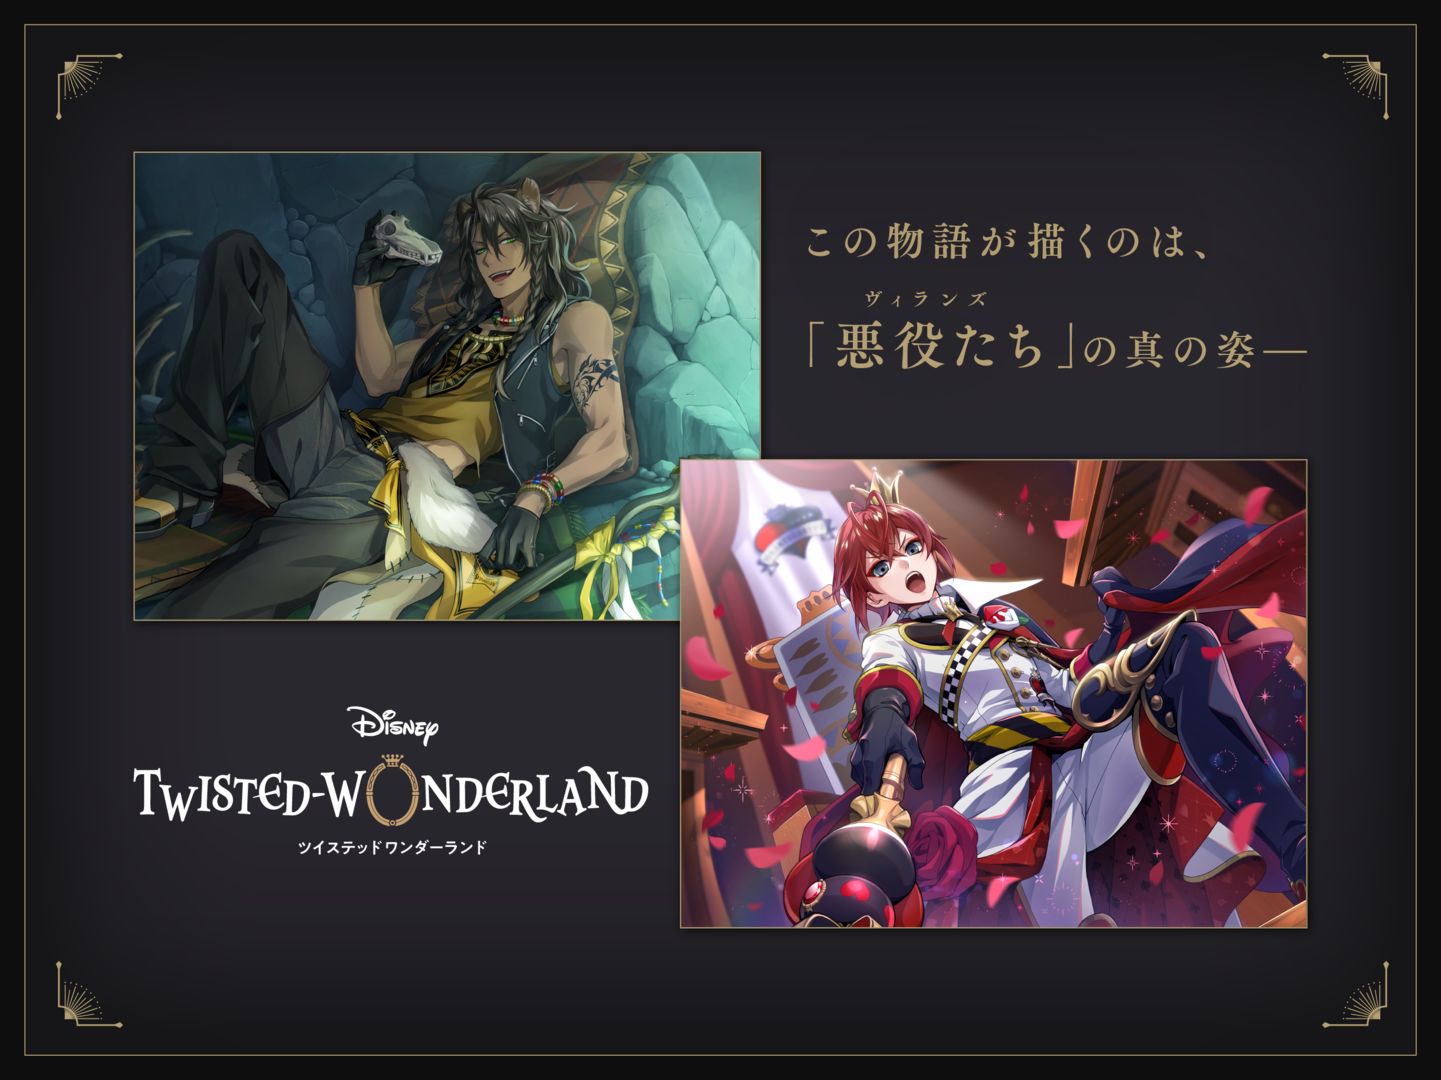 Screenshot of Disney Twisted-Wonderland